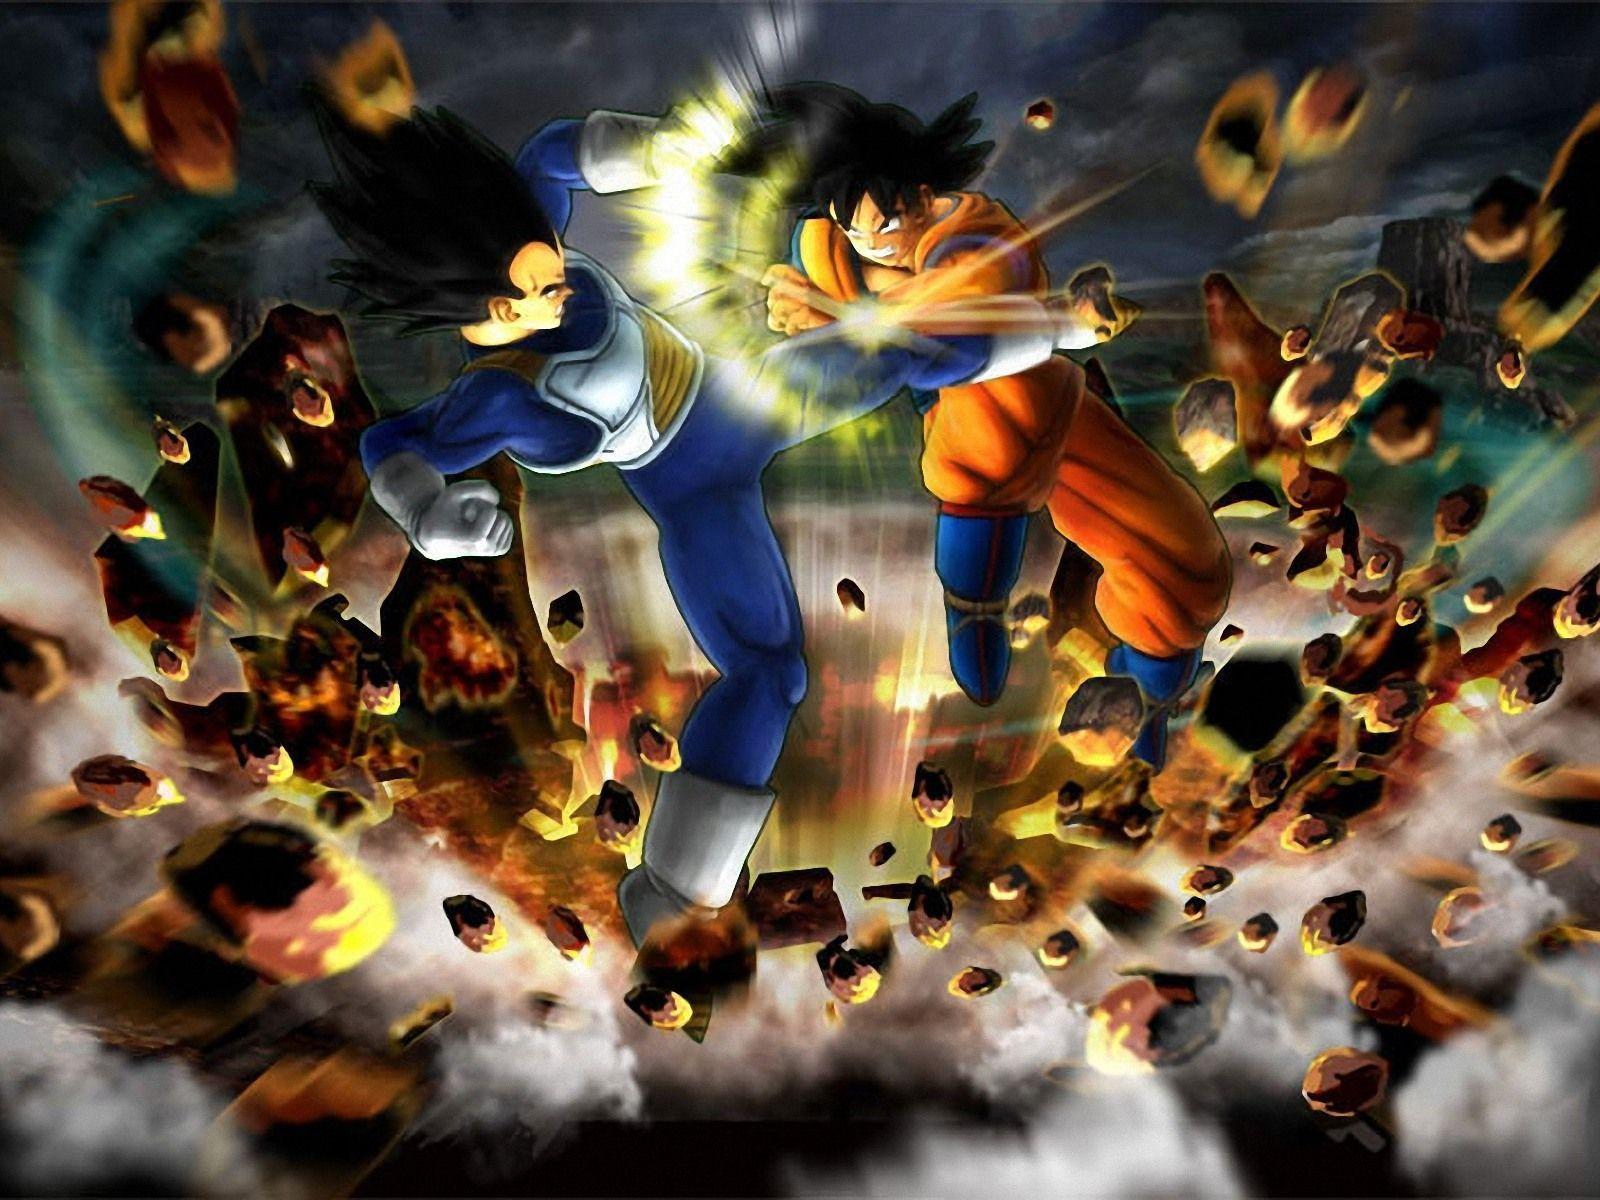 Game Wallpaper Dragon Ball Z Goku VS Vegeta Desktop Mobile